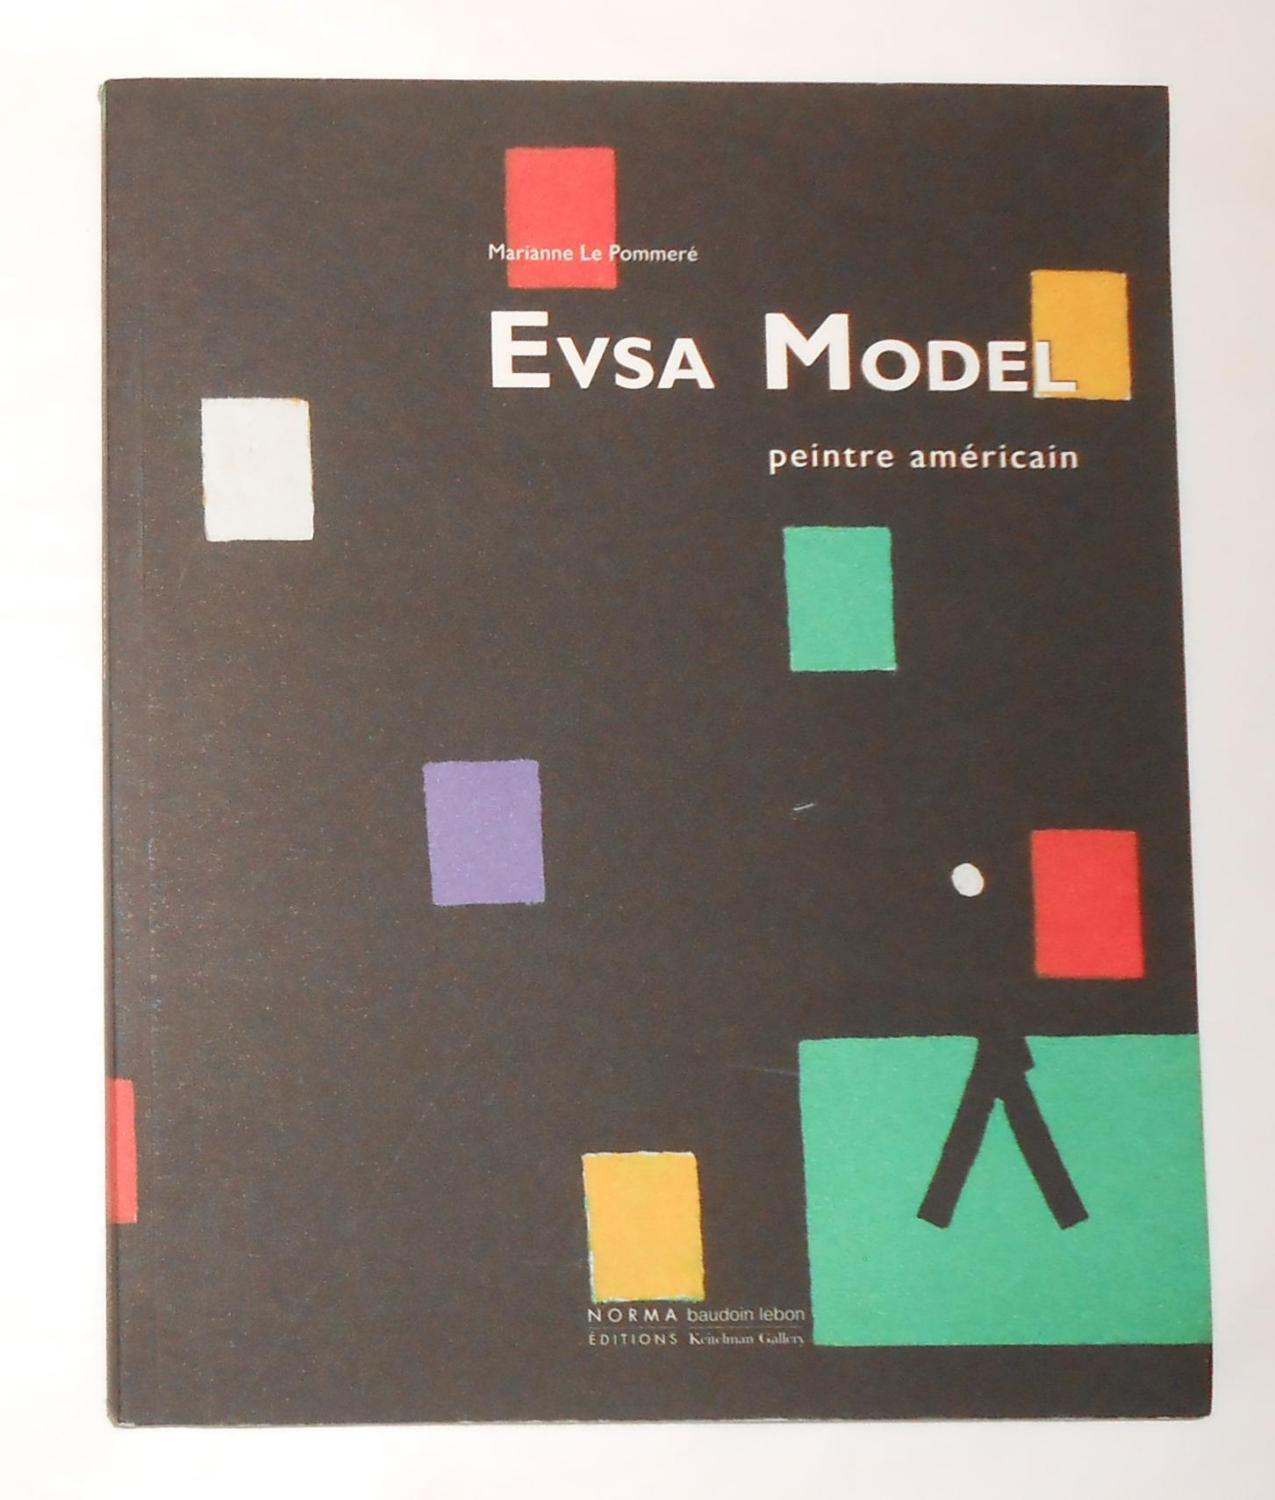 Evsa Model - Peintre Americain by MODEL, Evsa ] Marianne le